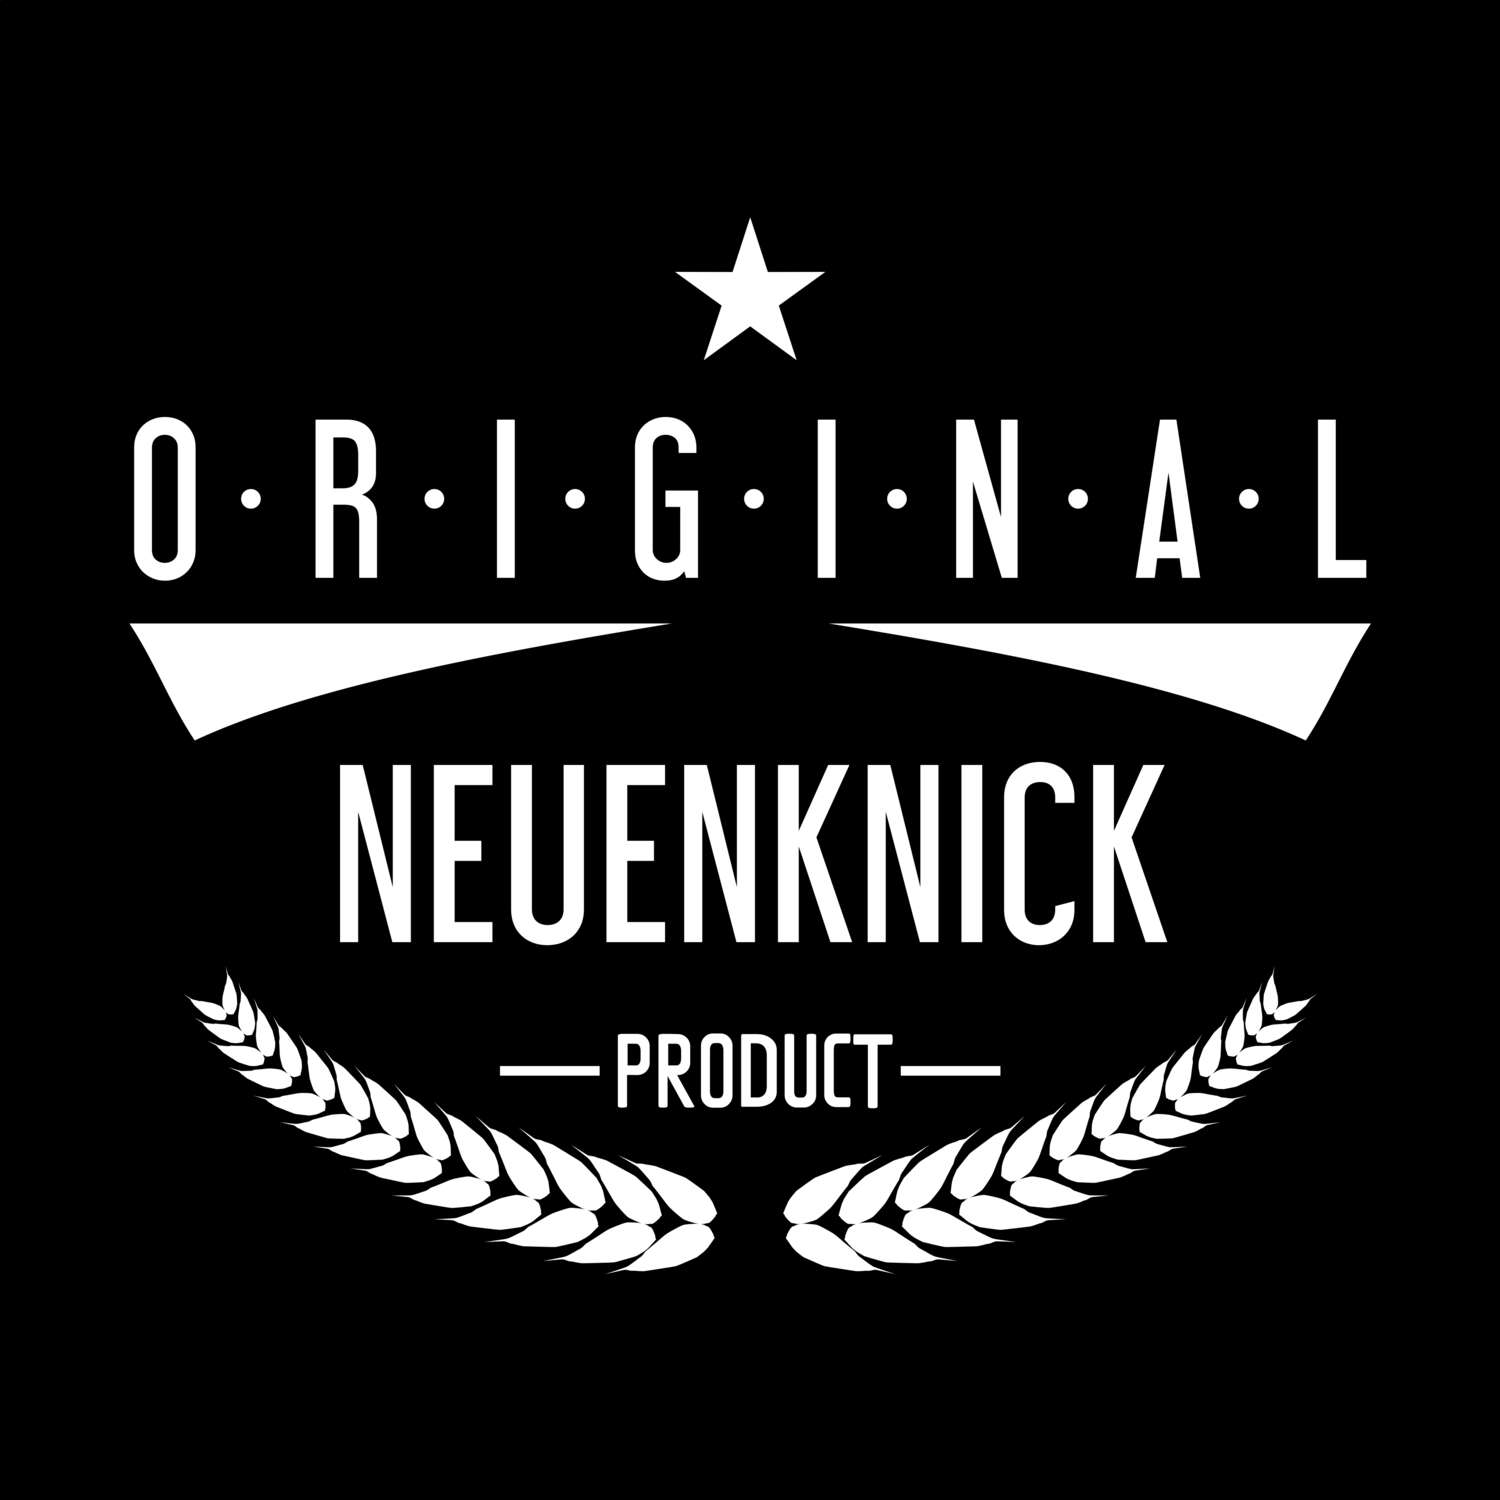 Neuenknick T-Shirt »Original Product«